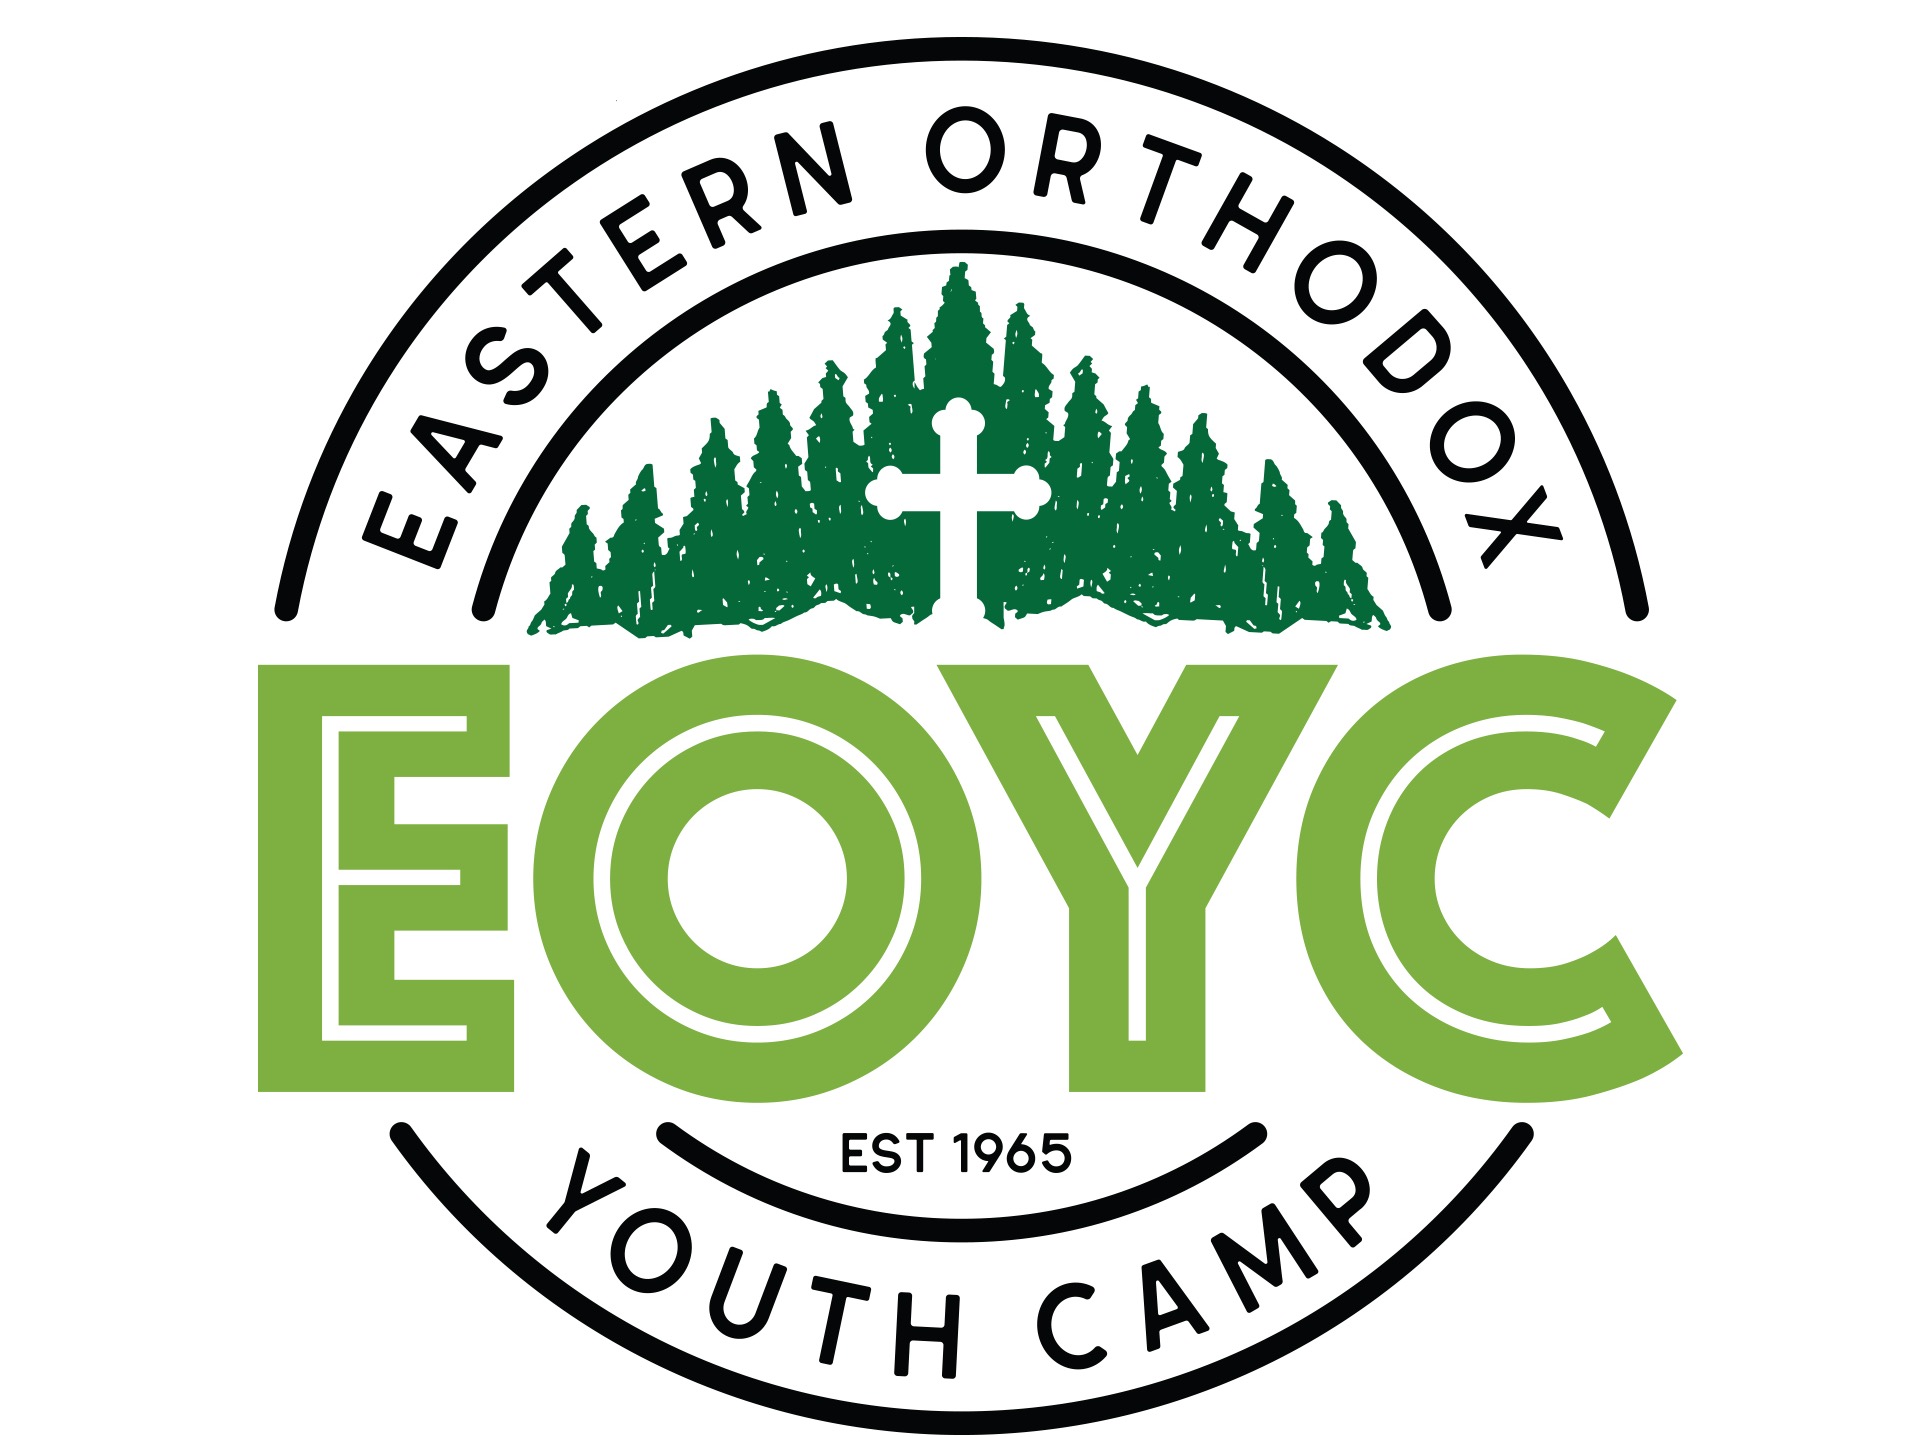 EOYC Registration